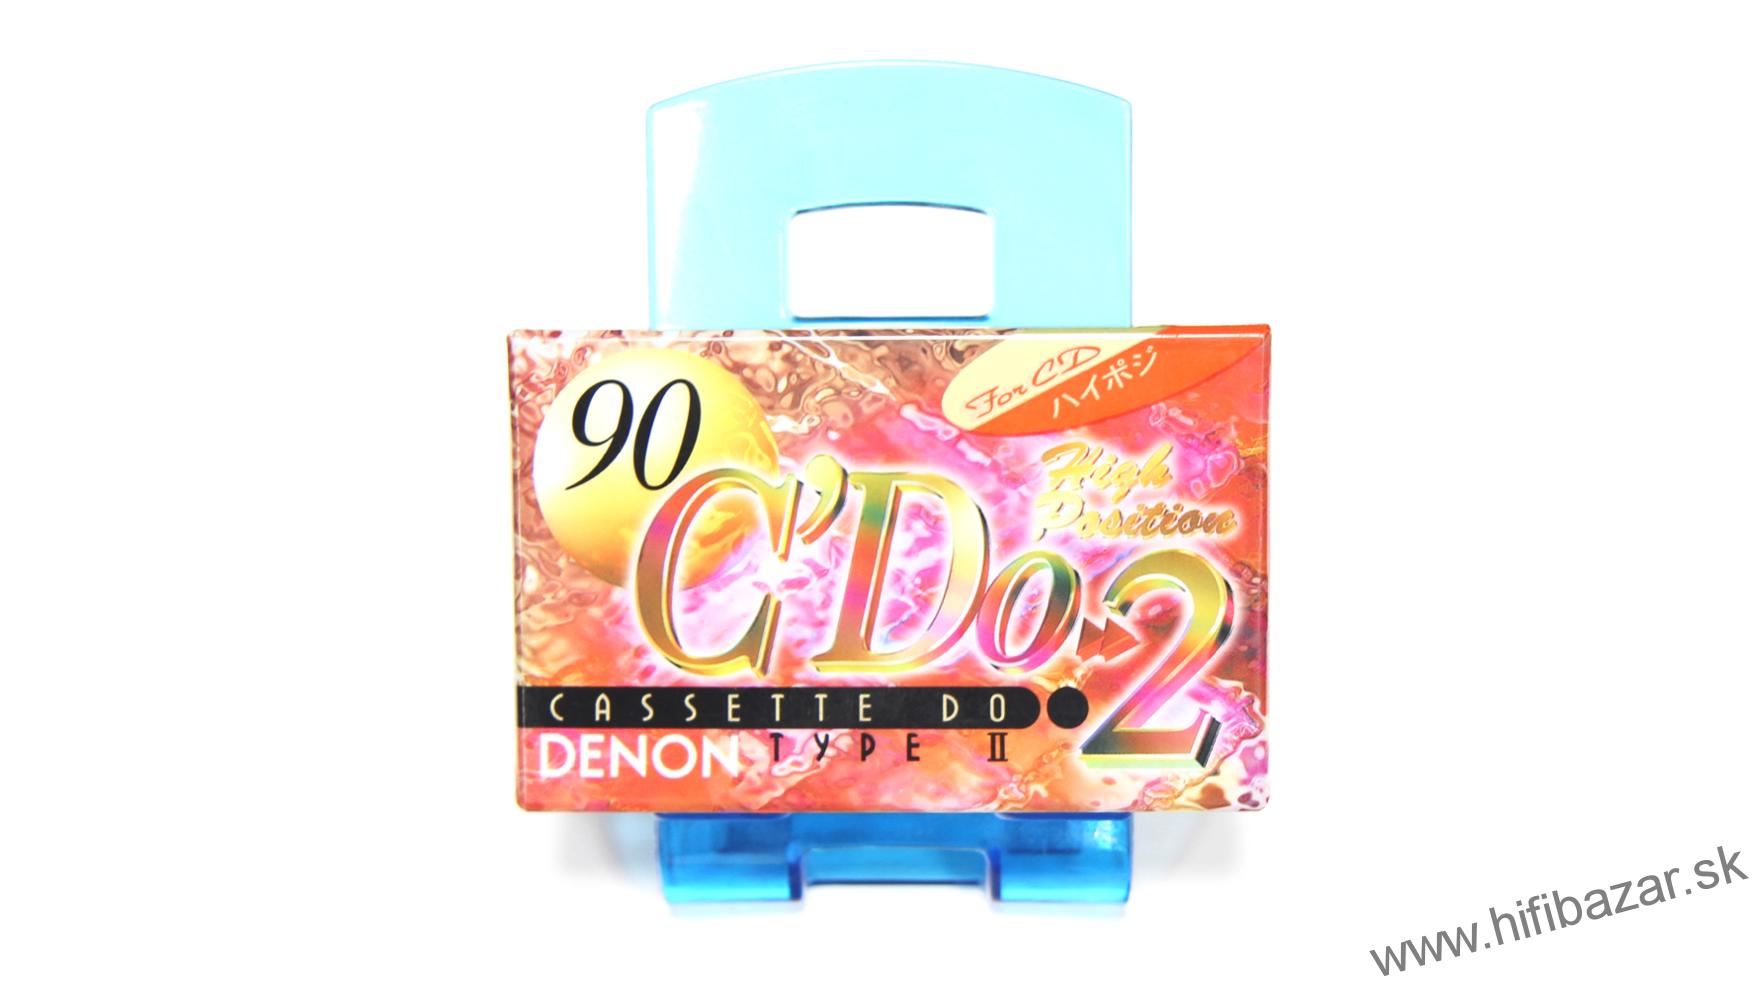 DENON C'DO2-90 Japan